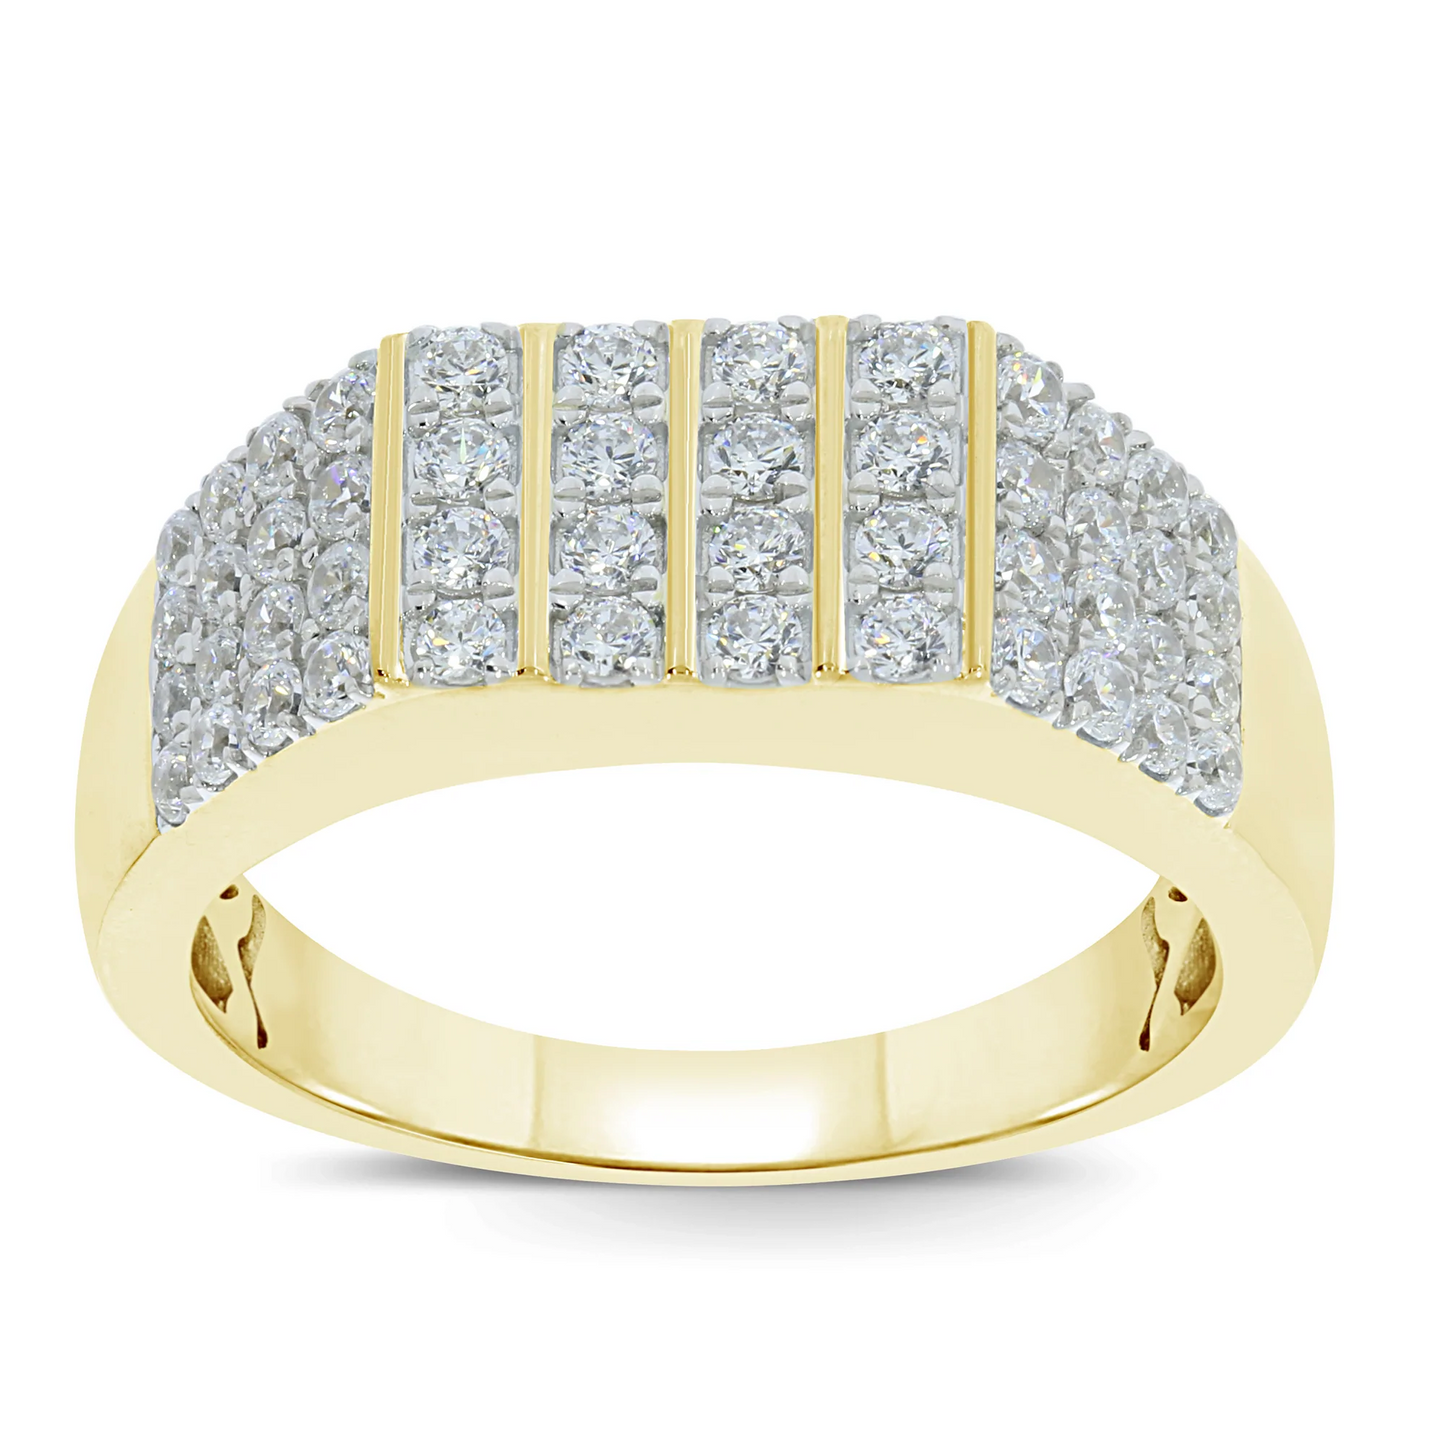 10K YELLOW GOLD .80 CARAT REAL DIAMOND ENGAGEMENT RING WEDDING RING BRIDAL BAND / SKU RG17357-YG